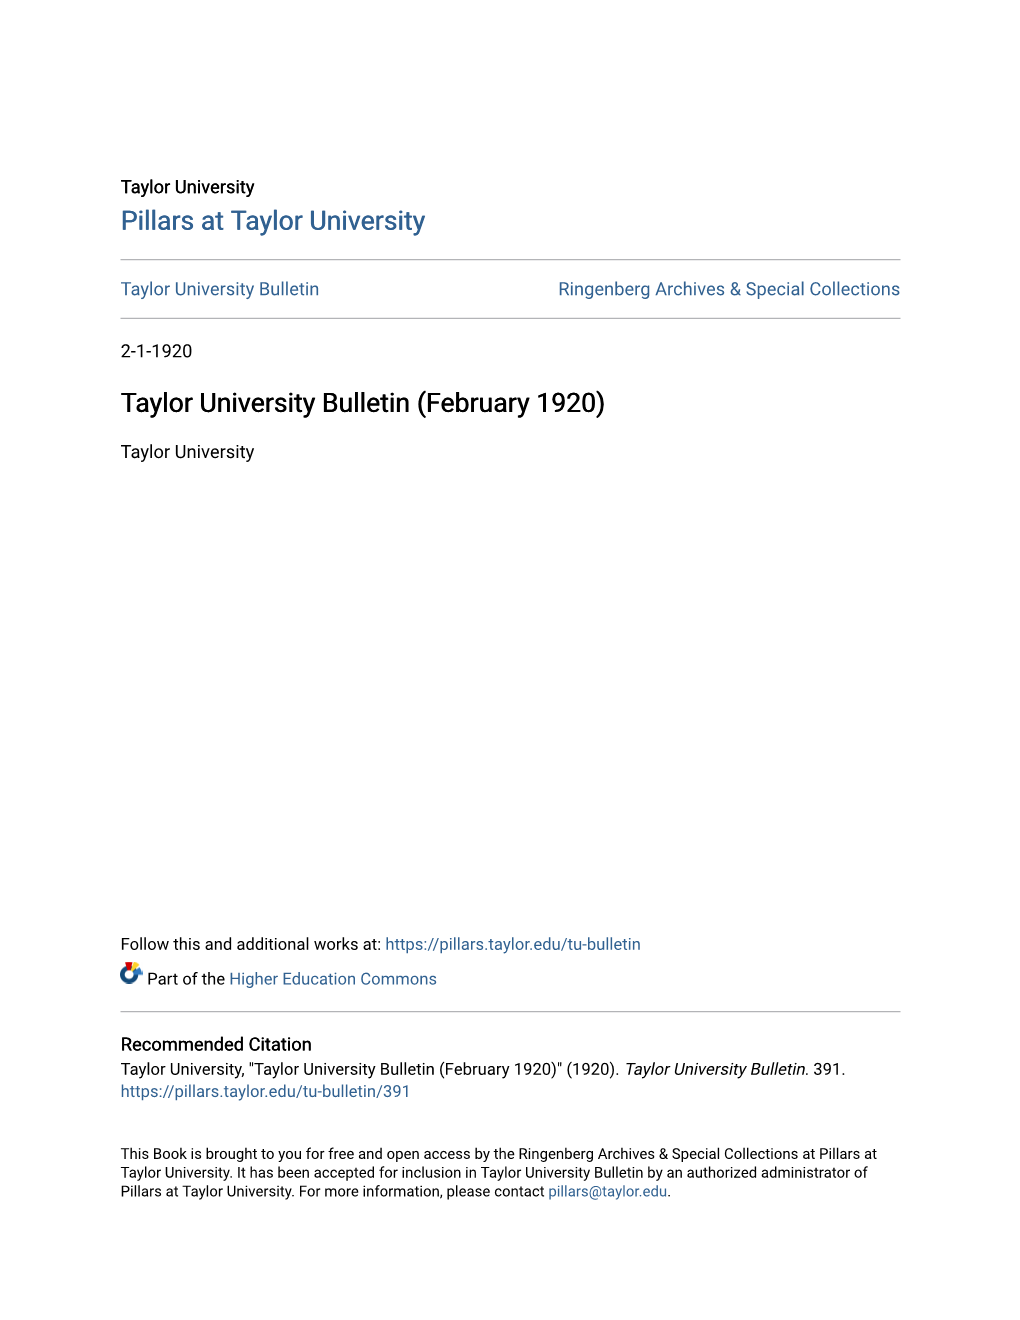 Taylor University Bulletin (February 1920)